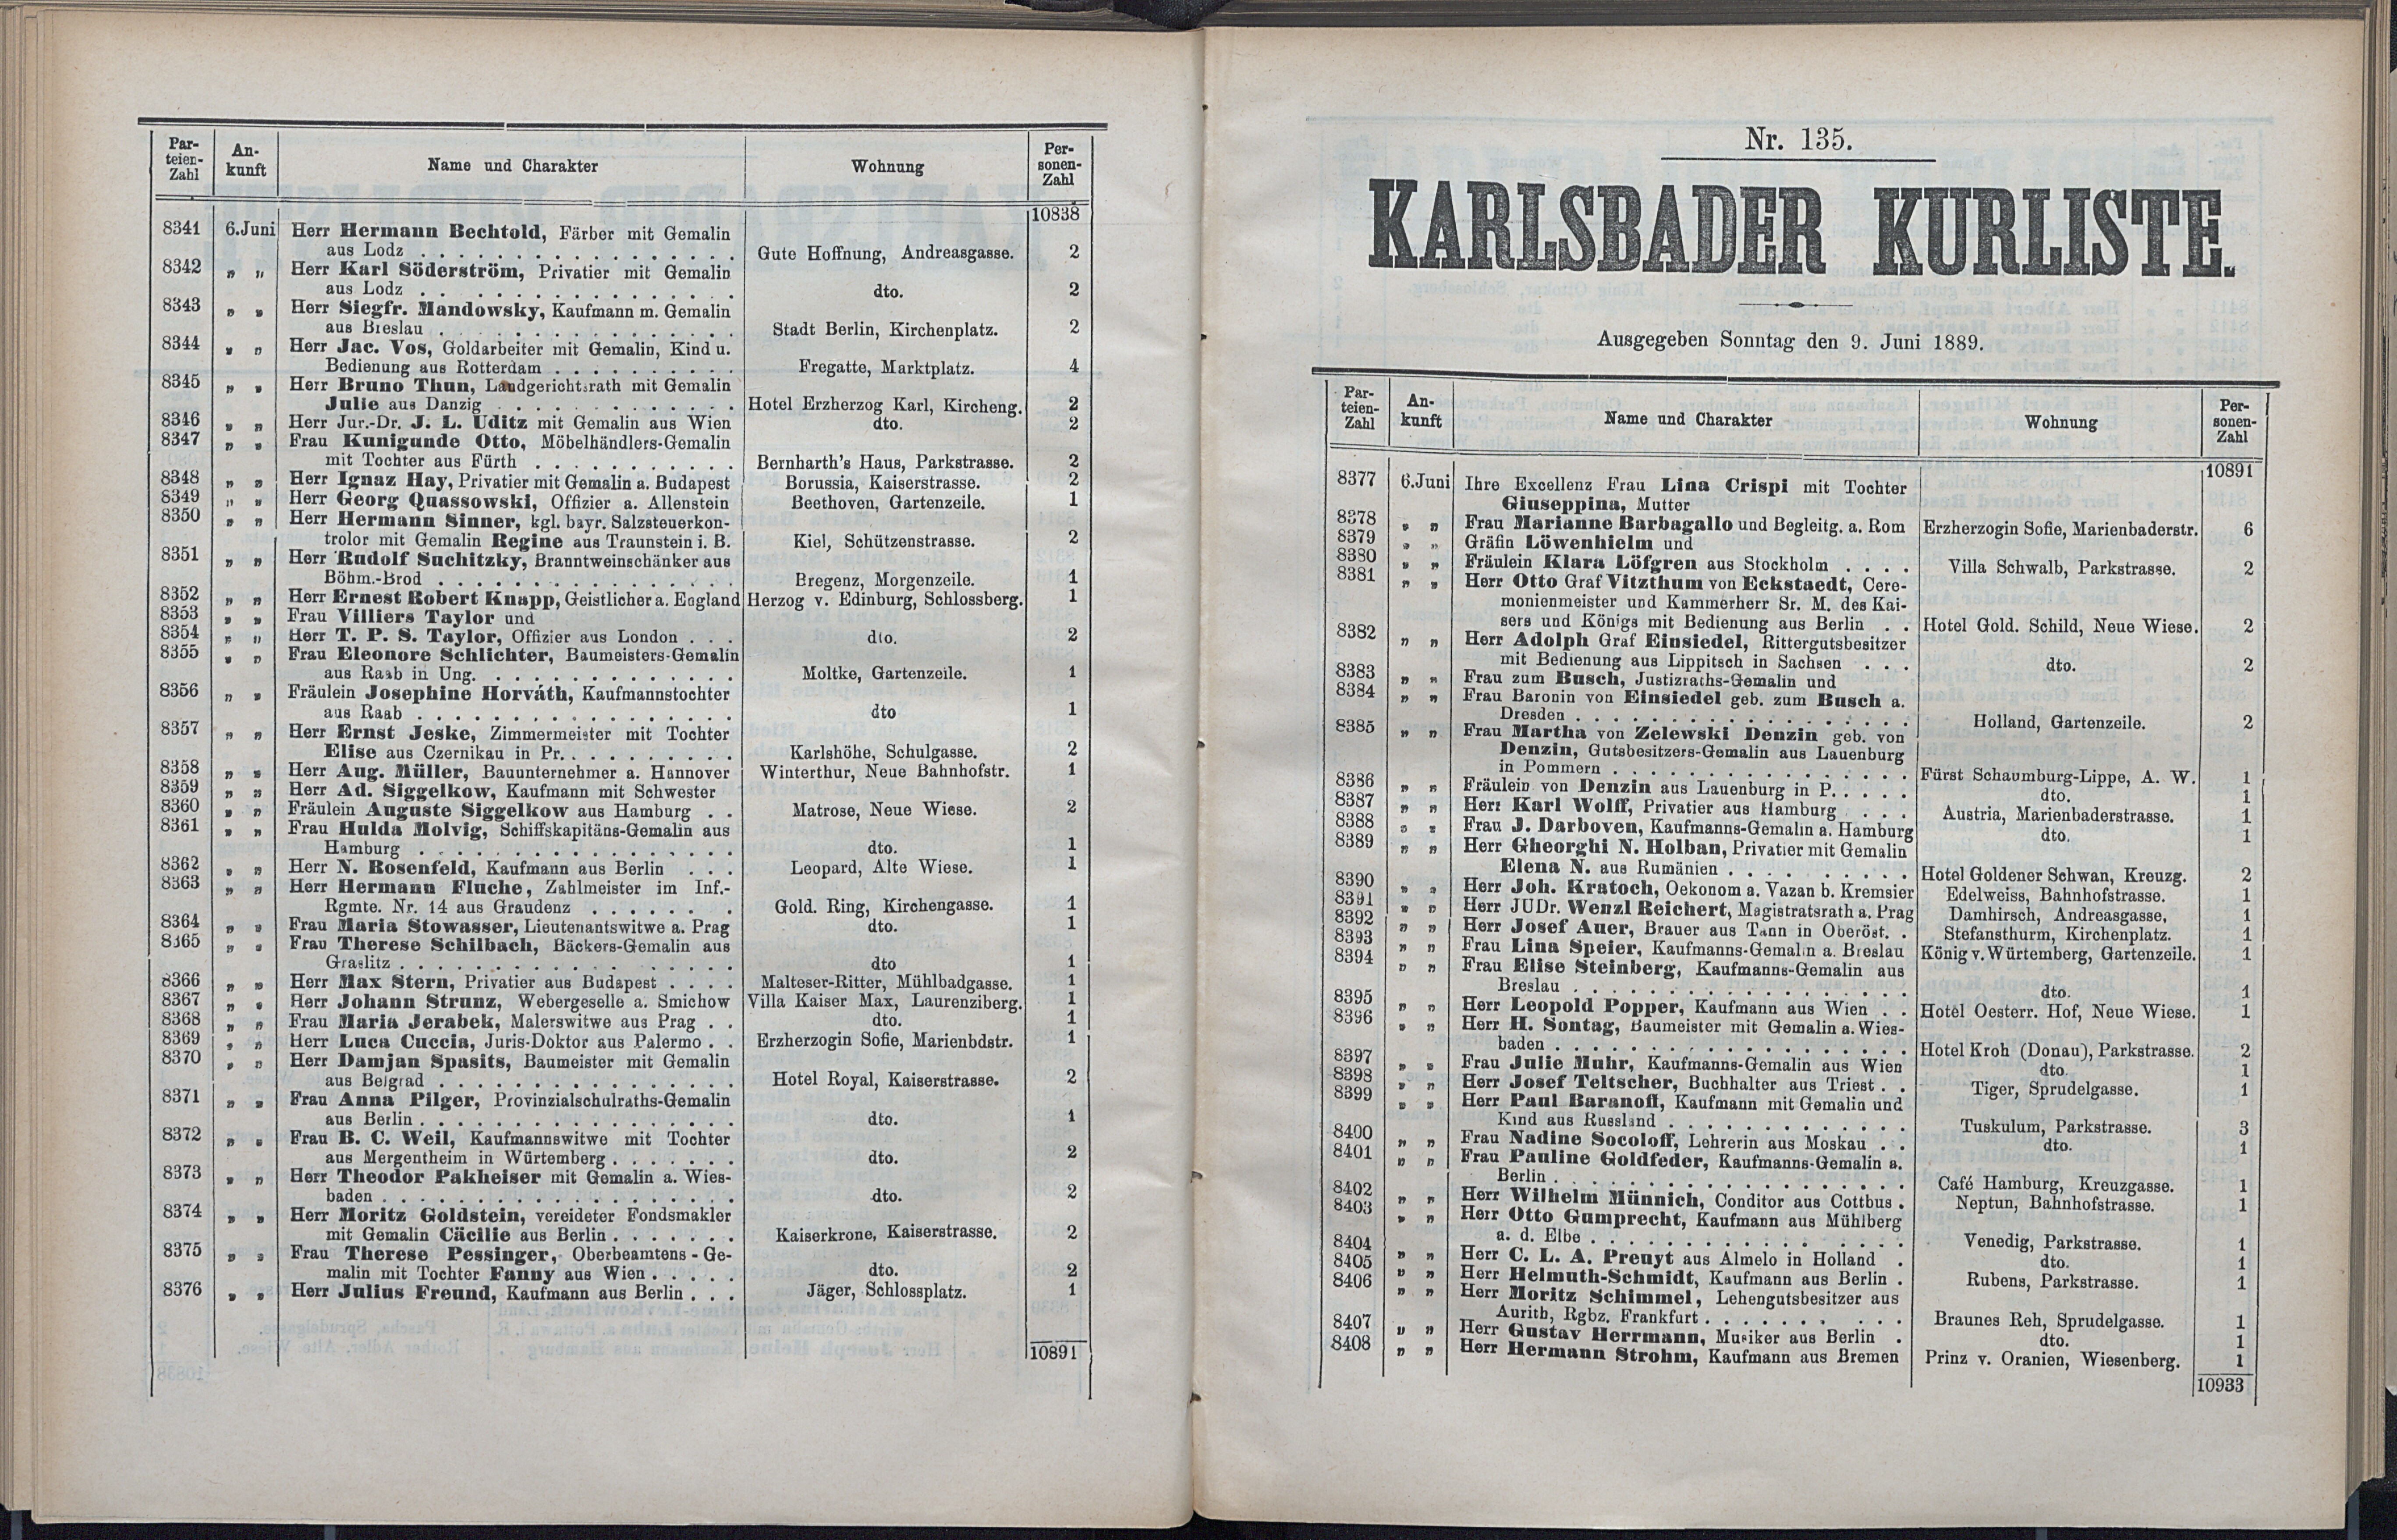 196. soap-kv_knihovna_karlsbader-kurliste-1889_1970